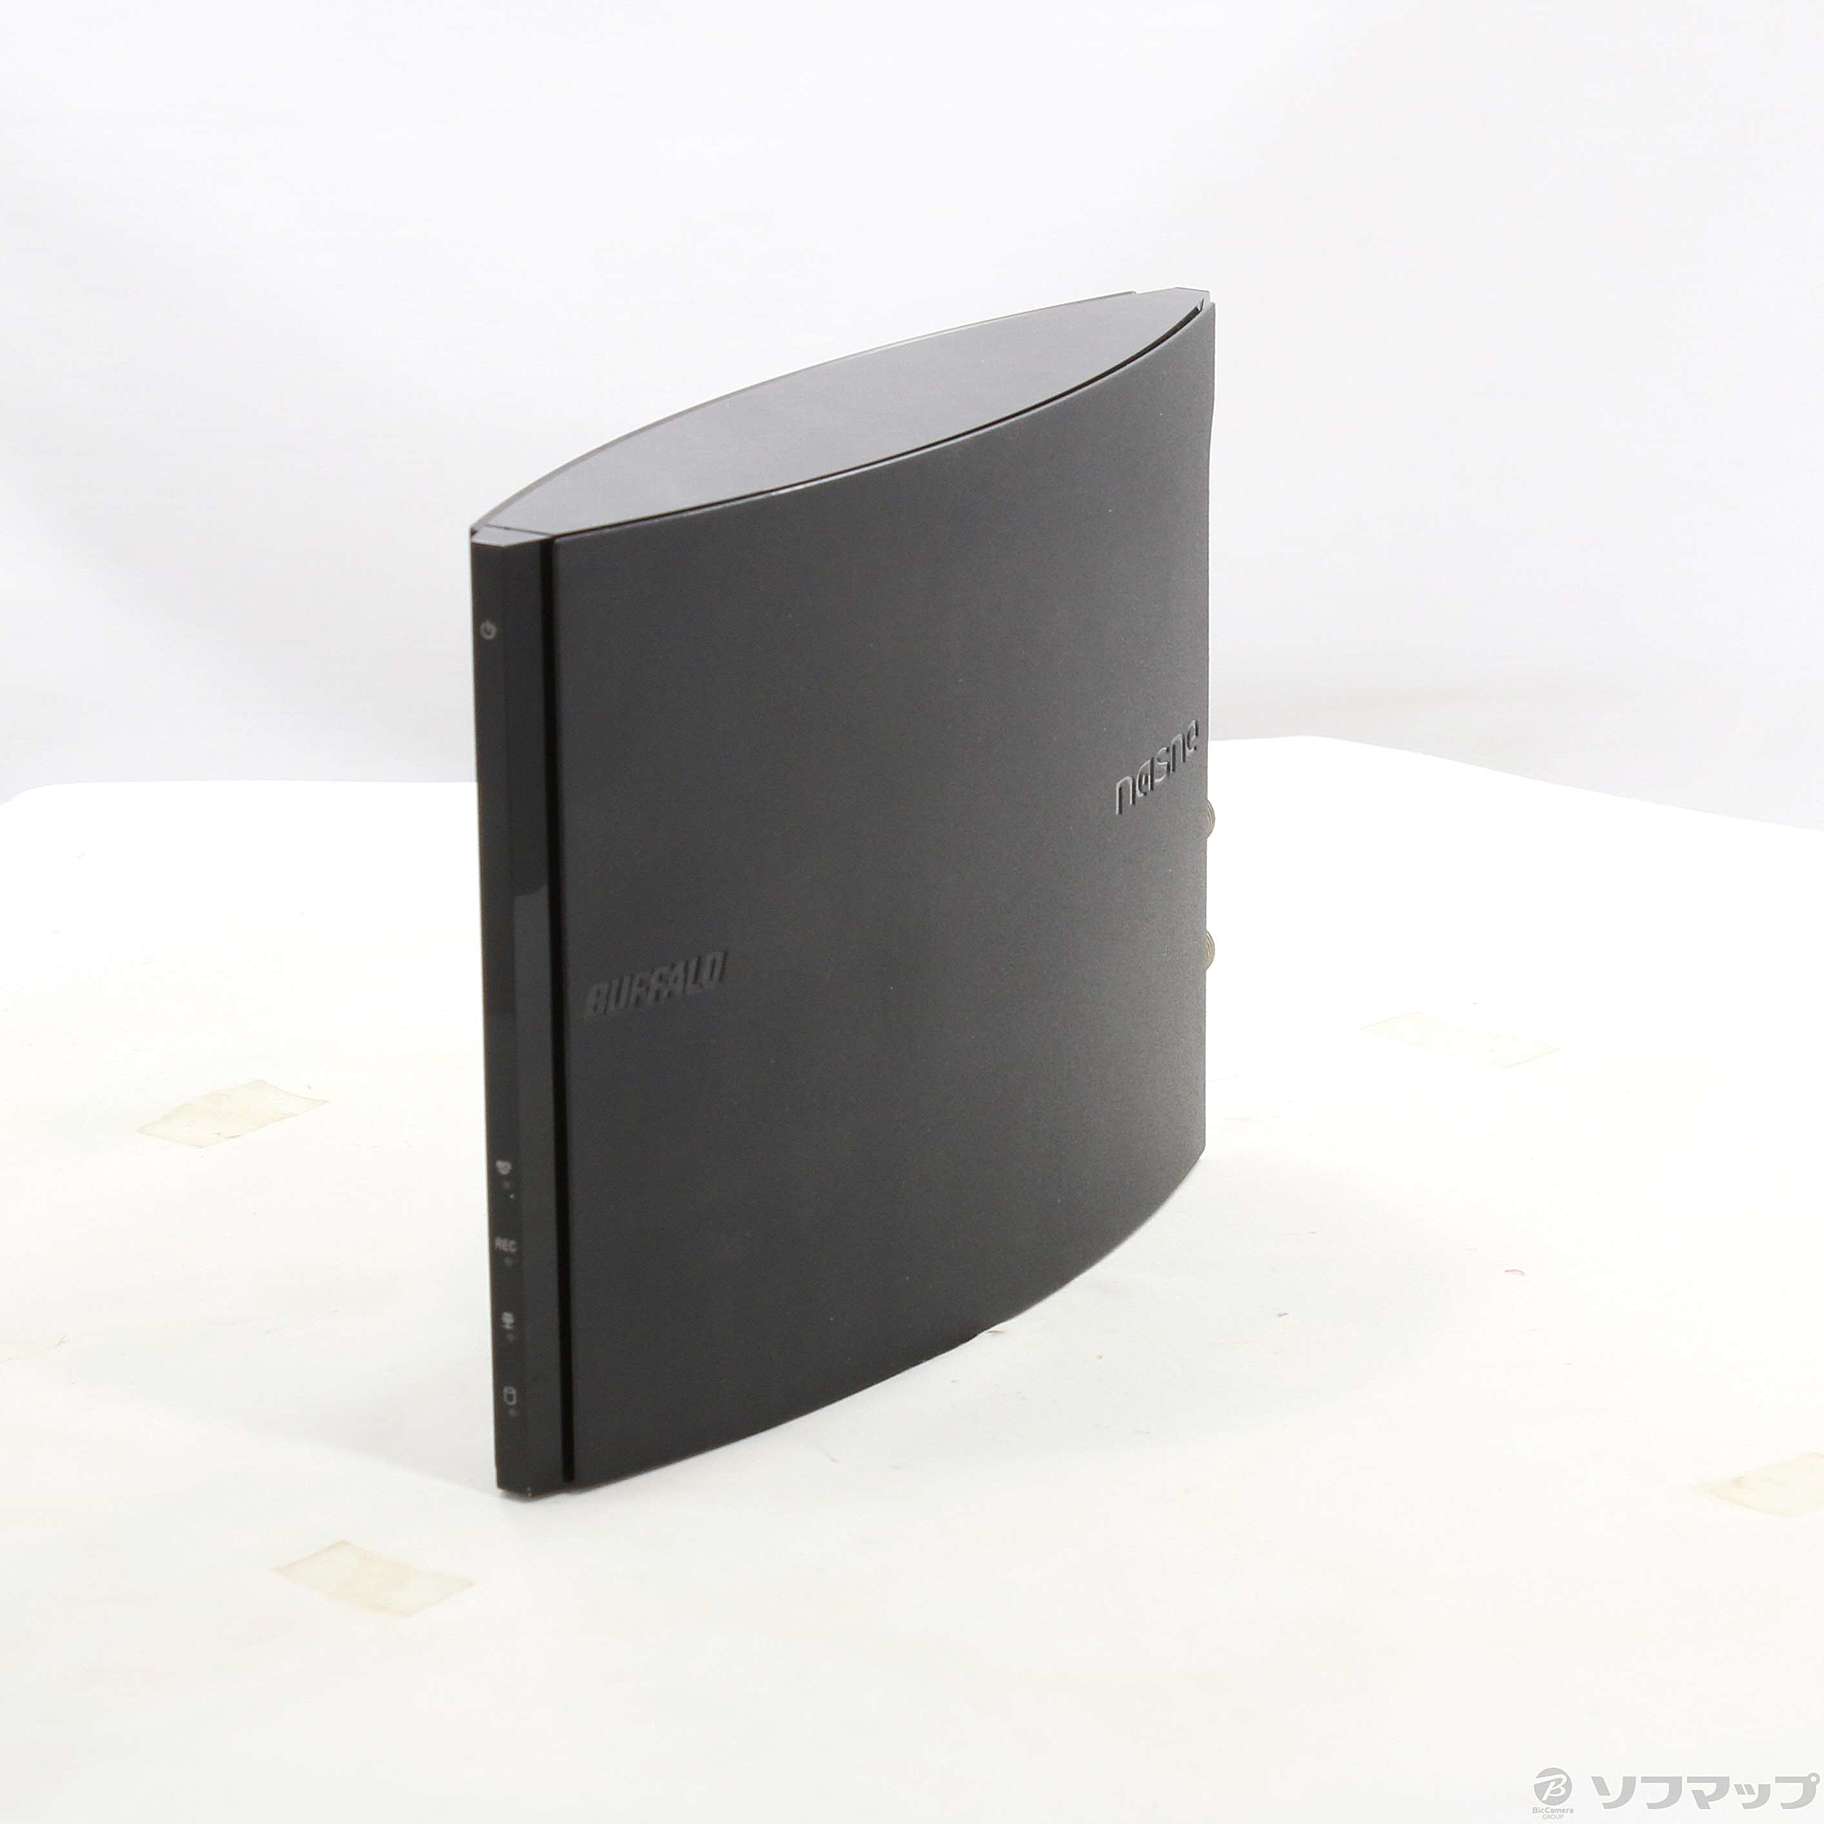 最新情報 BUFFALO nasne nasne 2TB NS-N100 Amazon.co.jp: BLACK 2TB ...